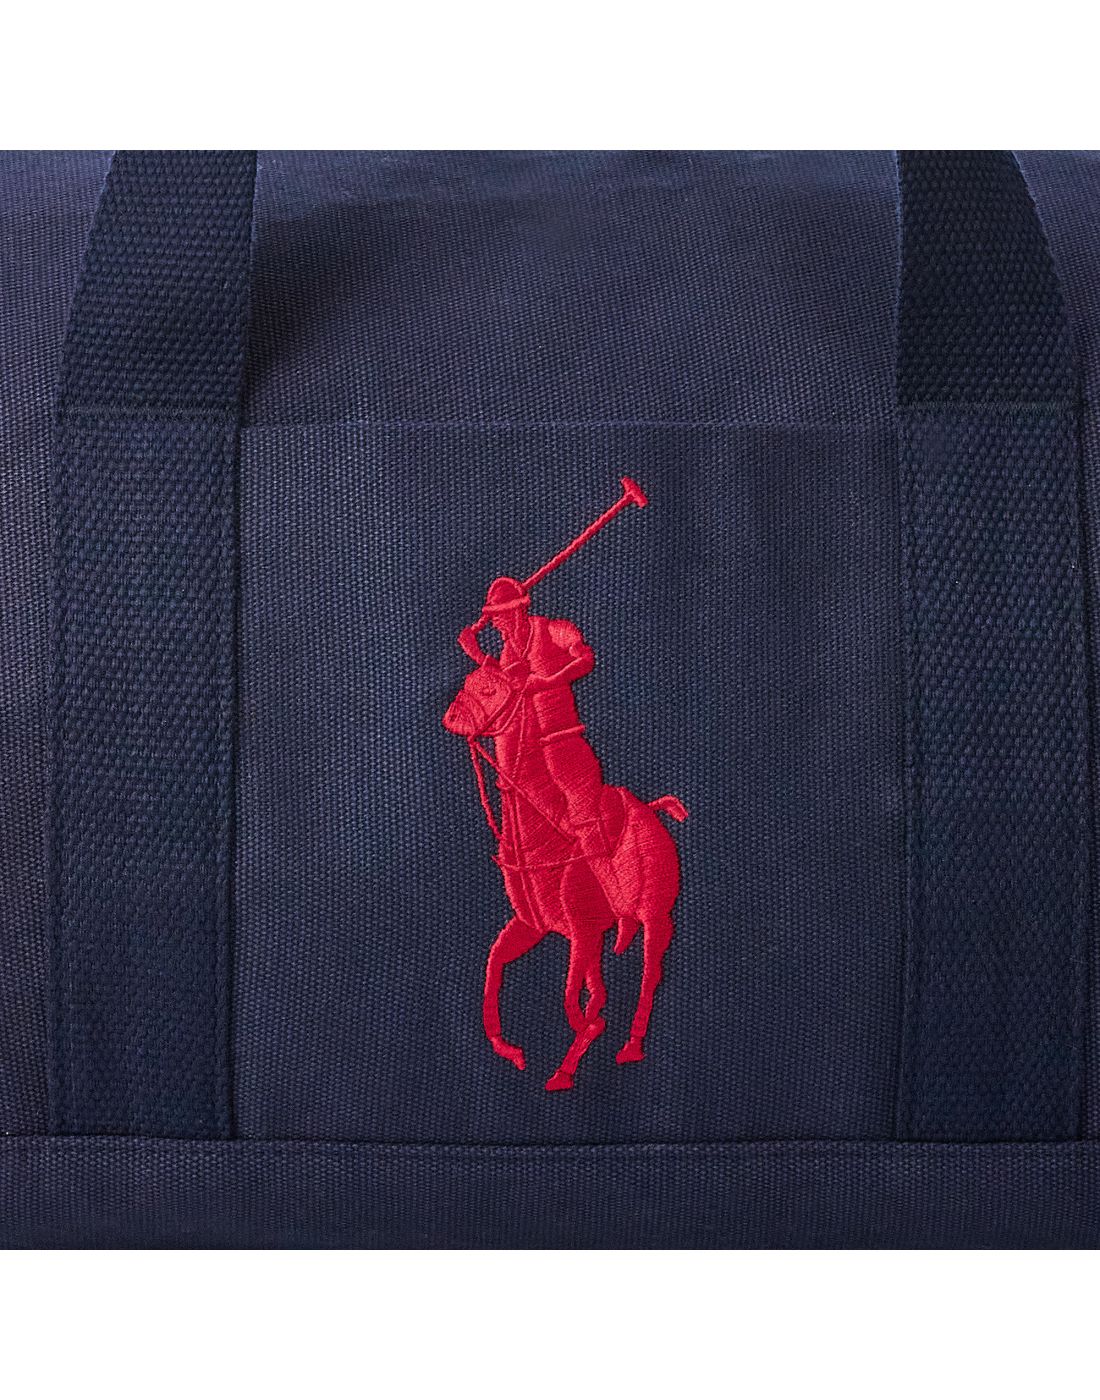 Polo Ralph Lauren Big Pony Cotton Canvas Duffel Bag